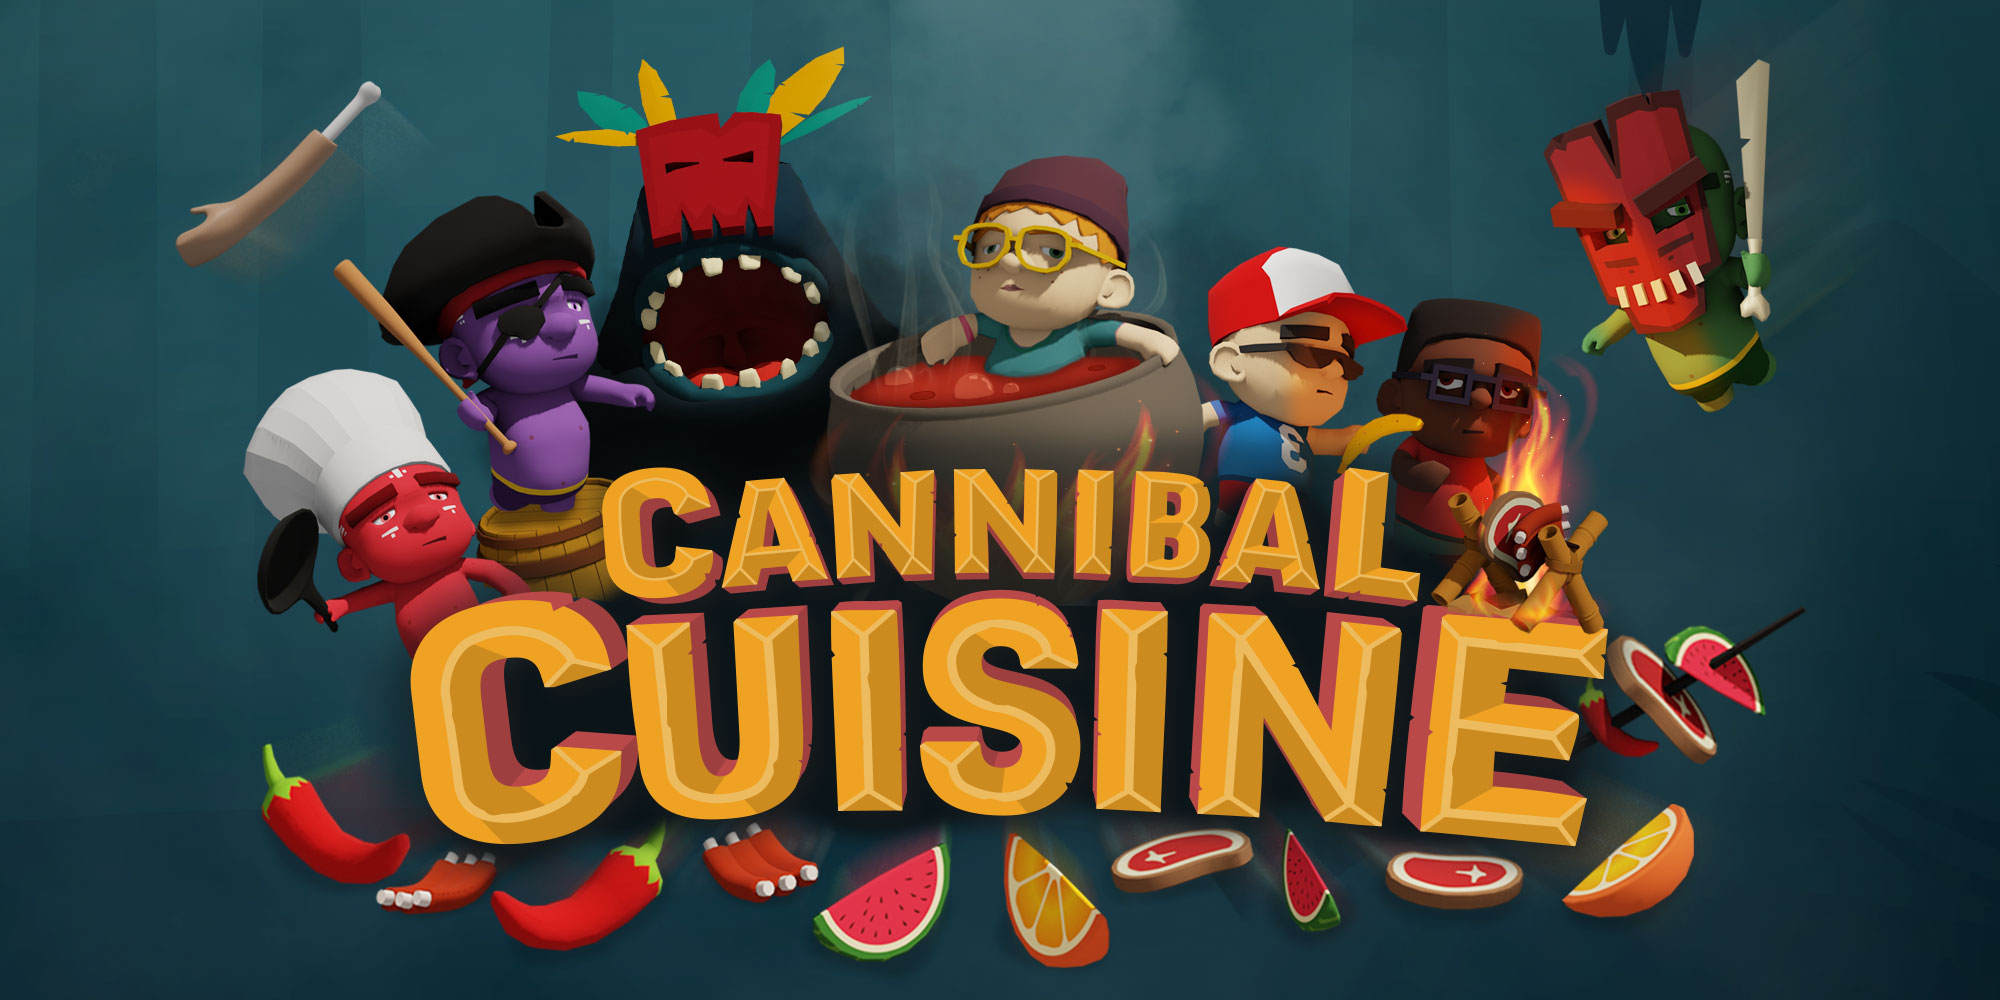 Cannibal                                                                                                                                                                                                                                                                            